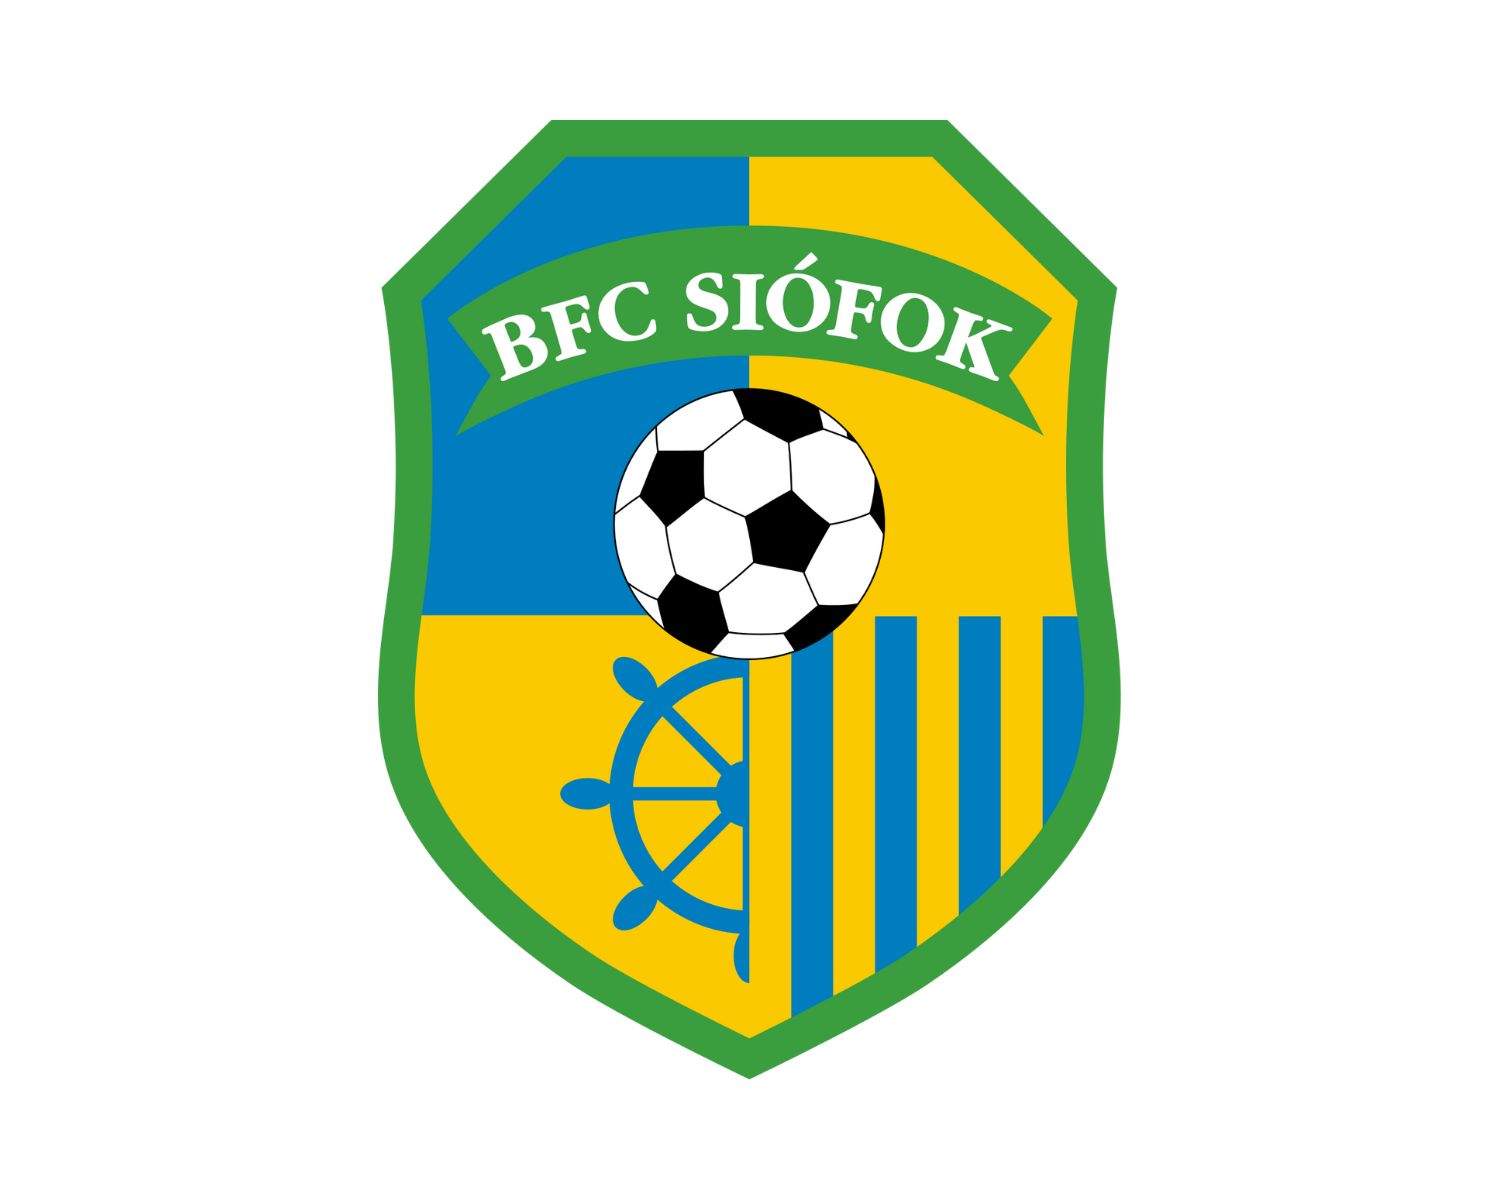 bfc-siofok-12-football-club-facts